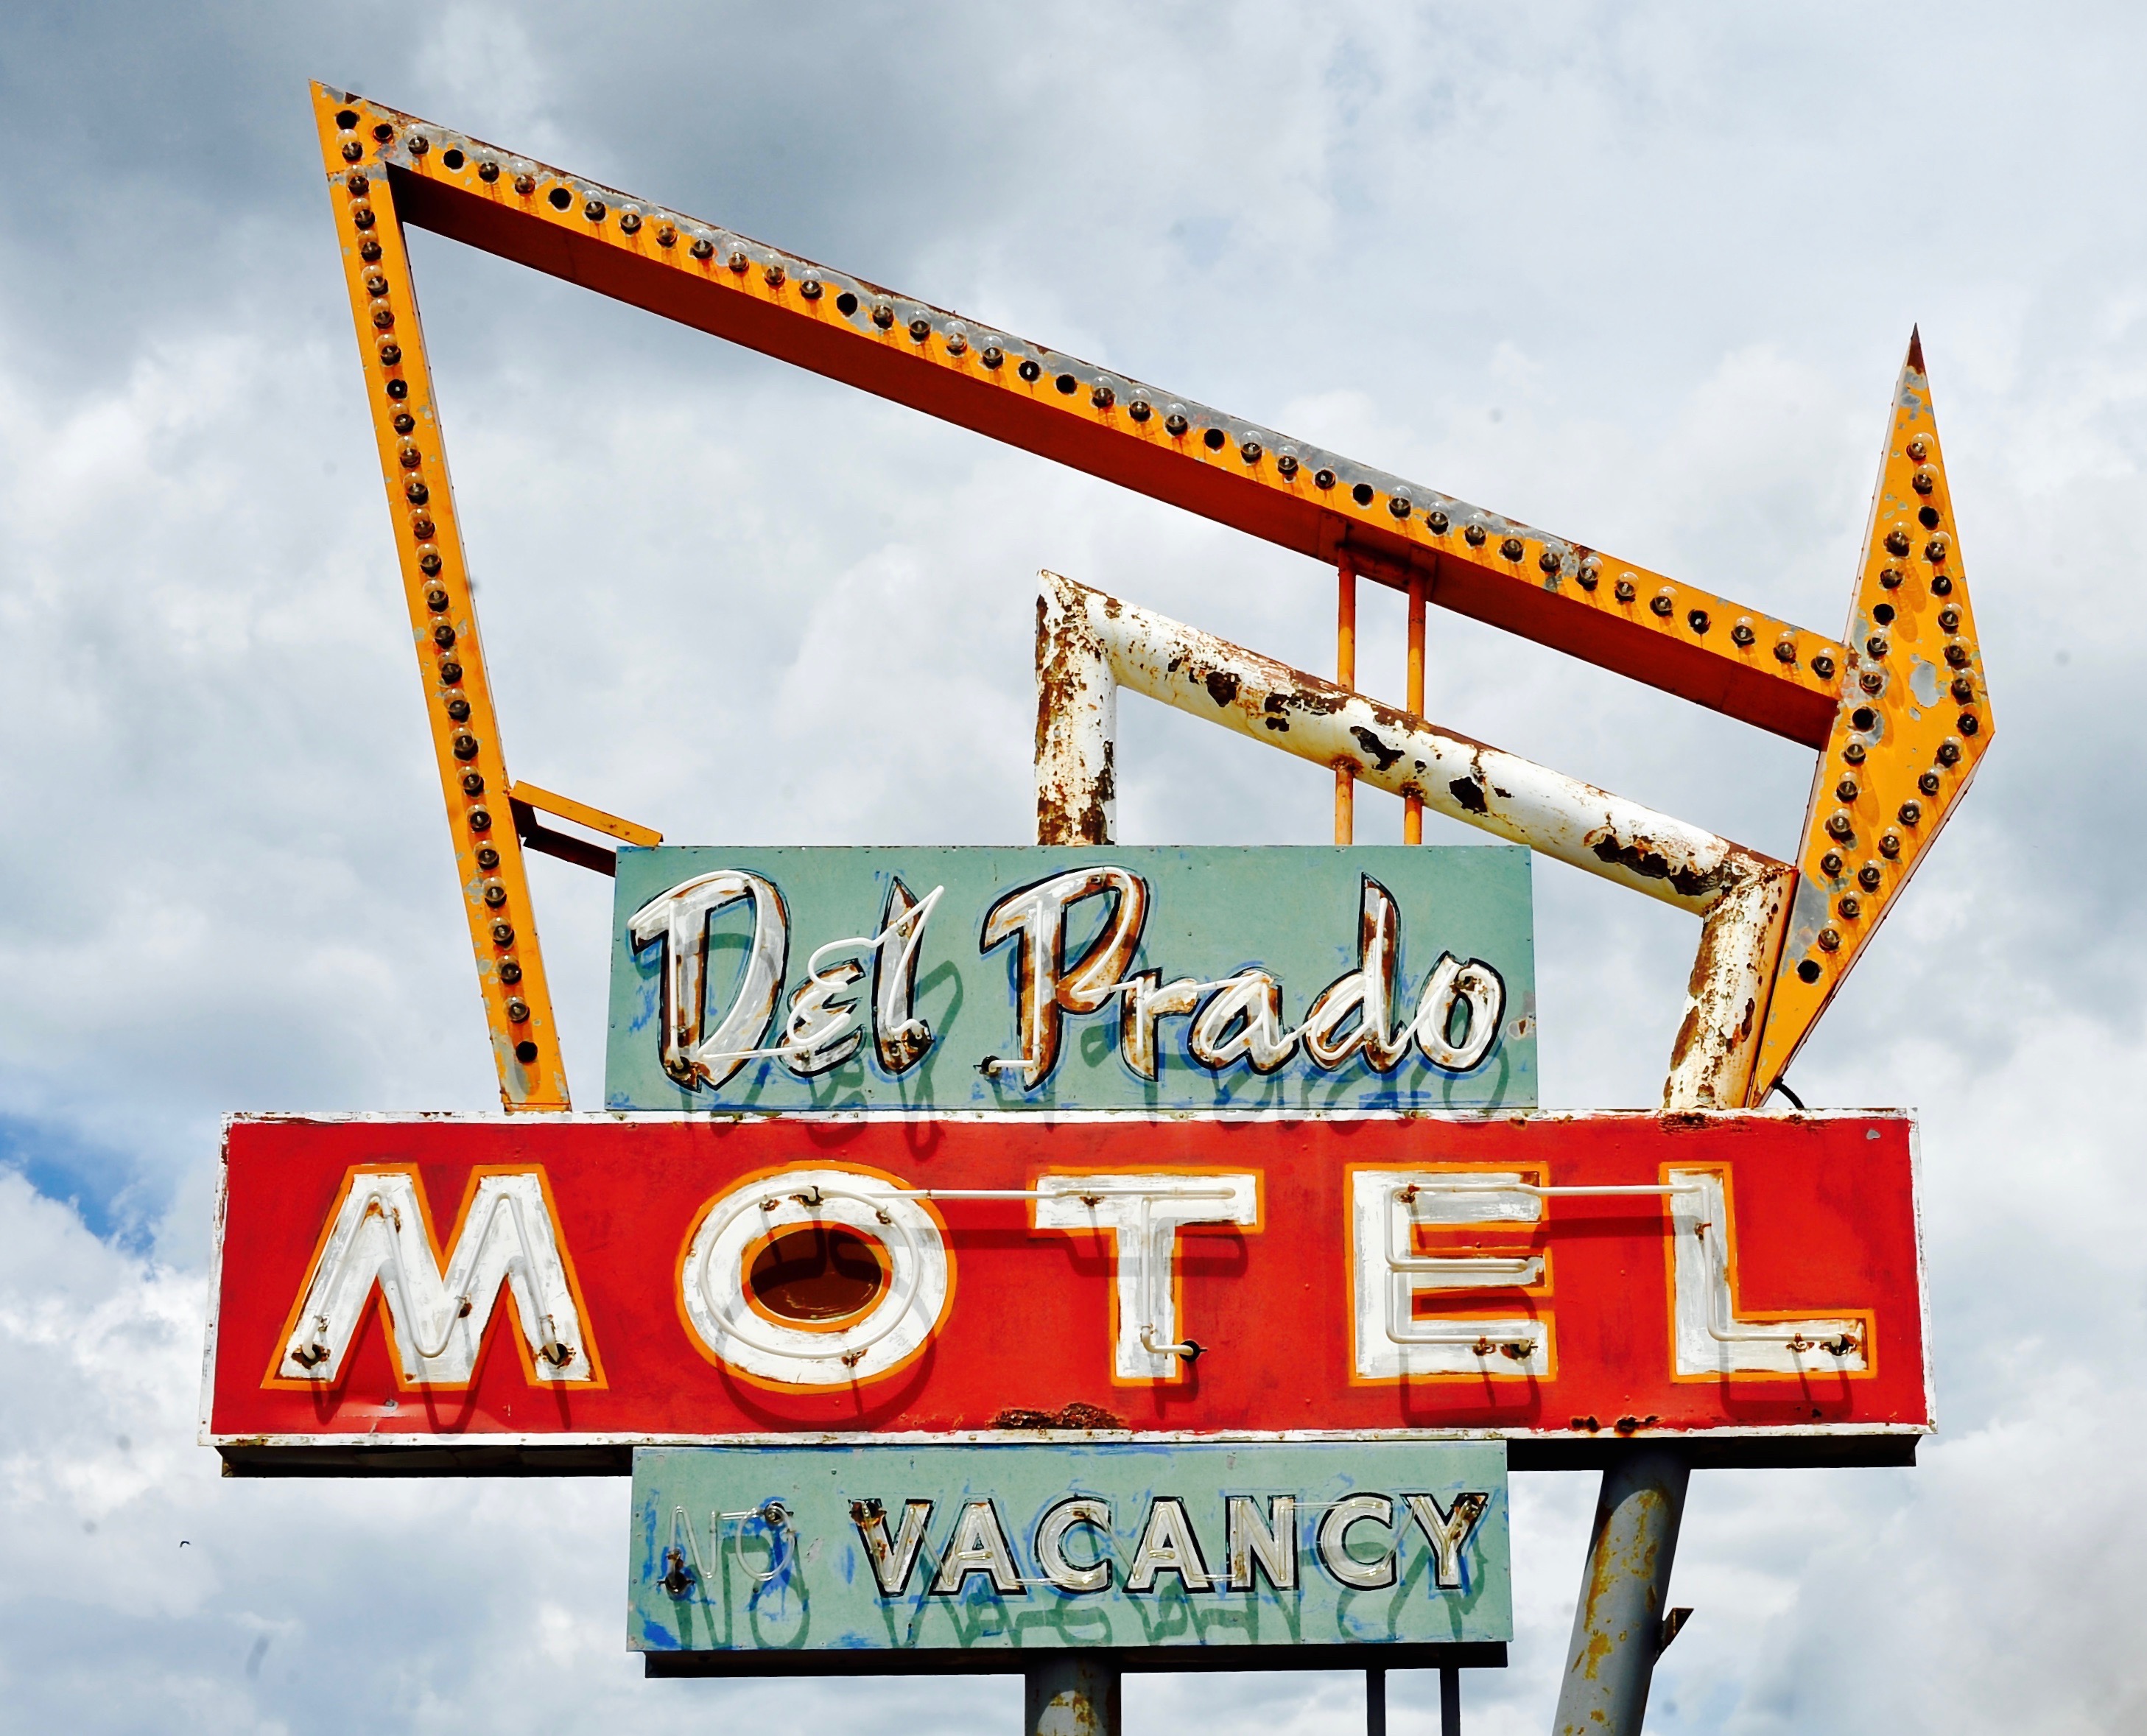 Del Prado Motel - 6380 U.S. 550, Cuba, New Mexico U.S.A. - June 29, 2015